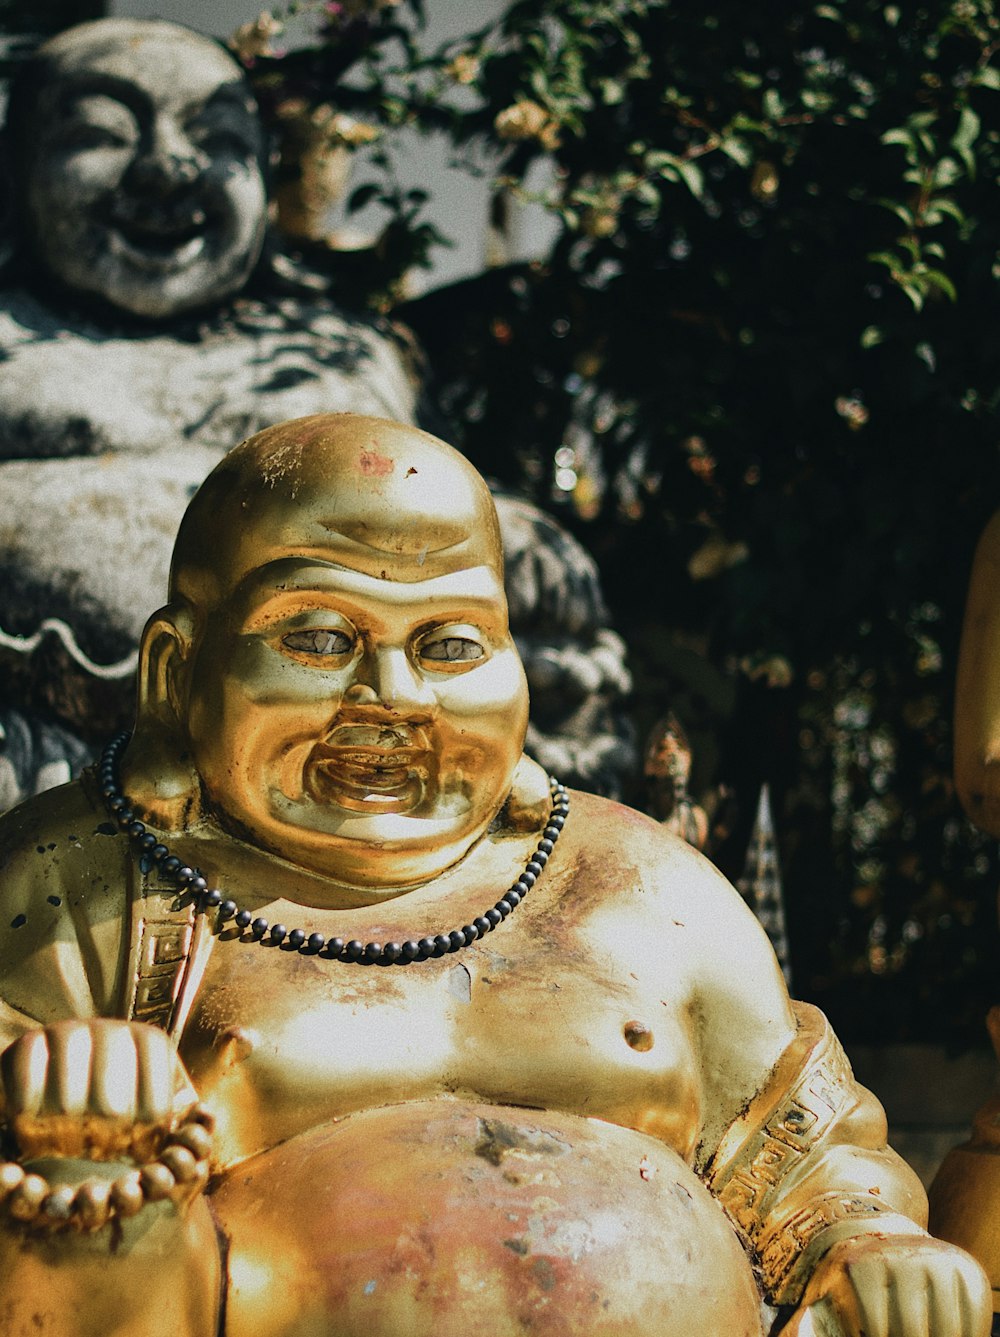 Budai figurine near statue